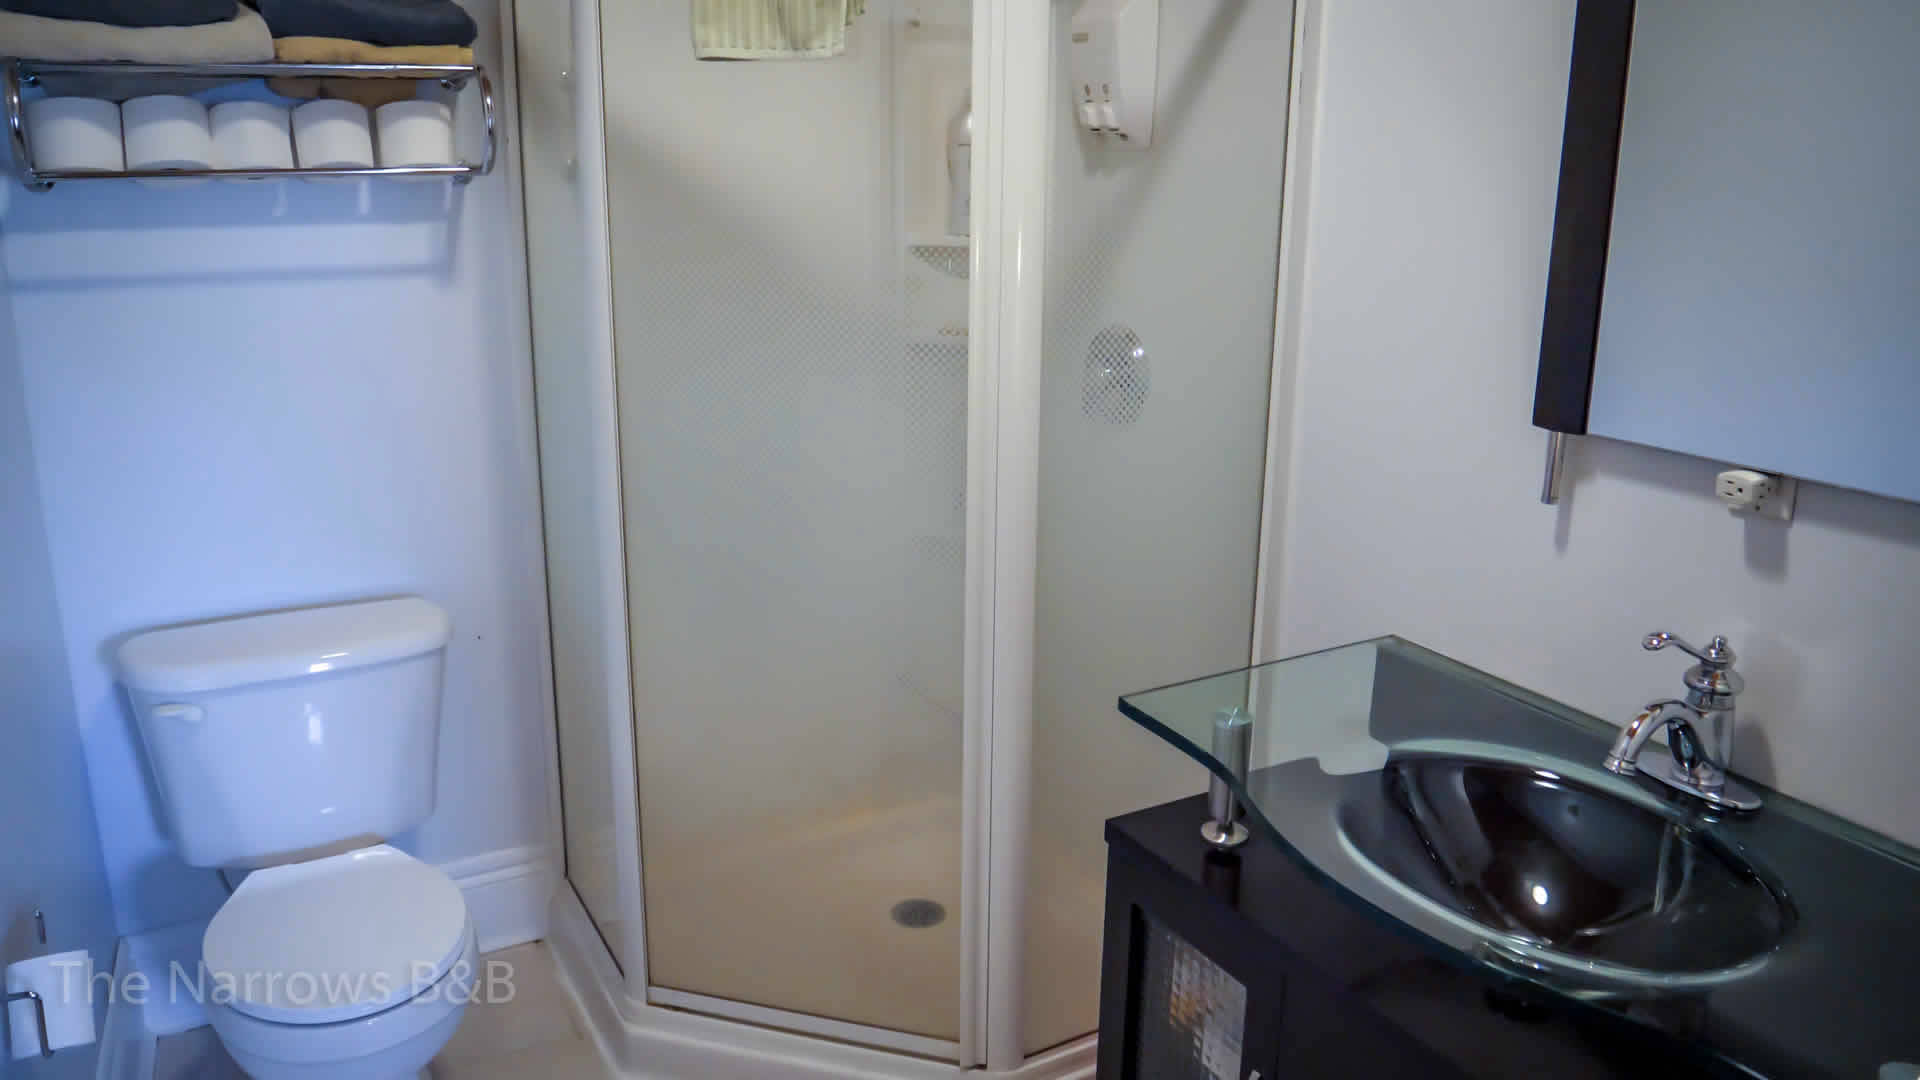 image: interior bathroom shower stall